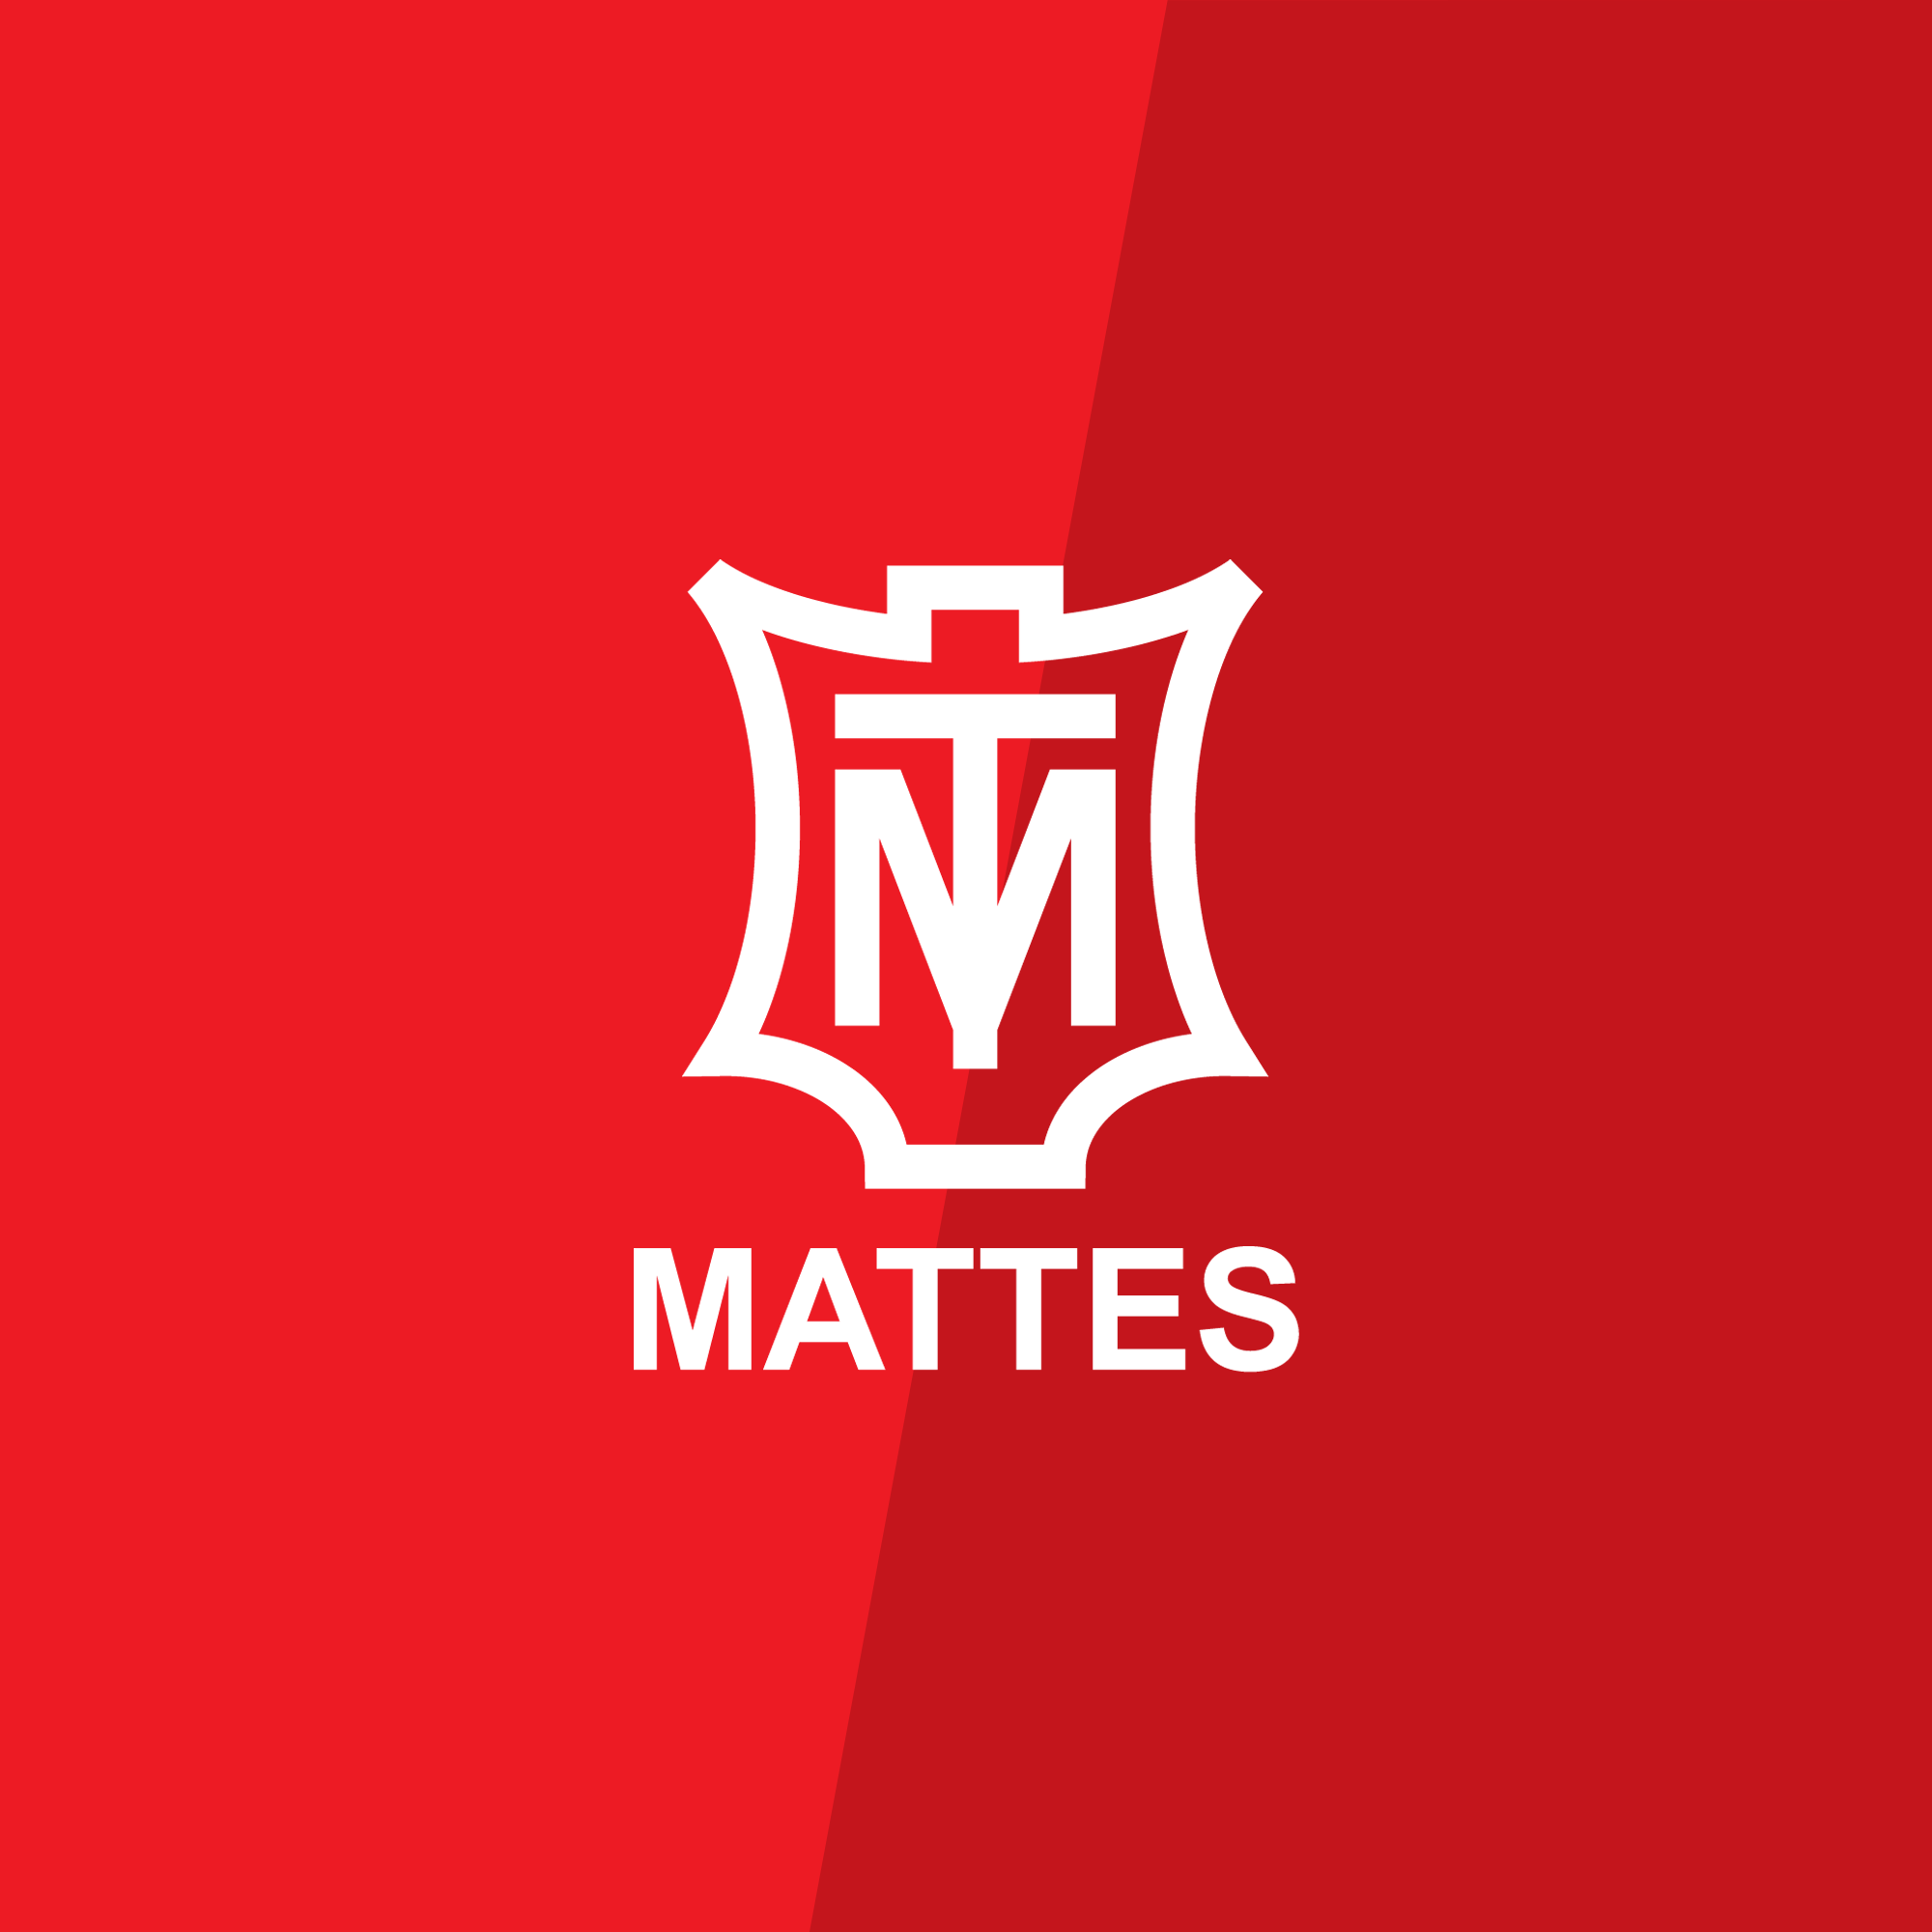 Logo Mattes